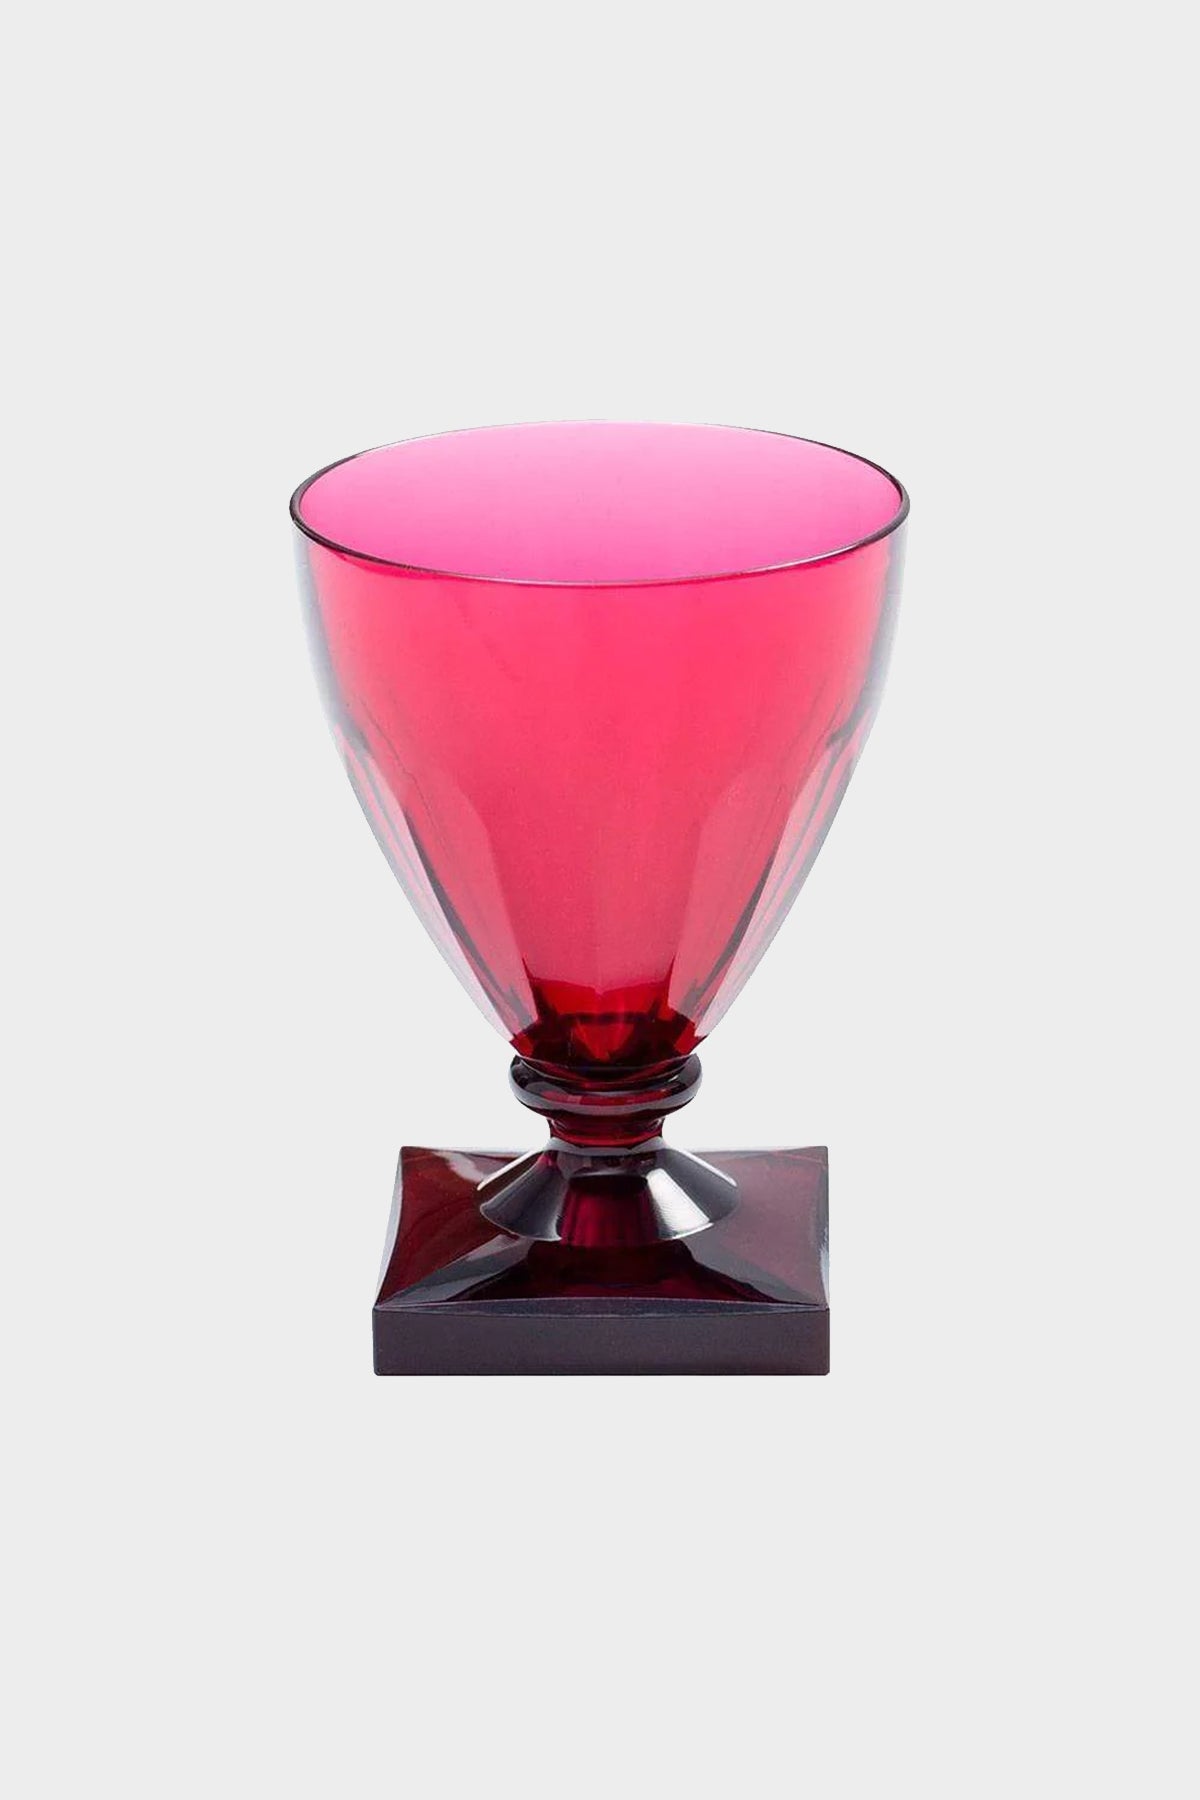 Acrylic 8.5oz Wine Goblet in Cranberry - shop-olivia.com